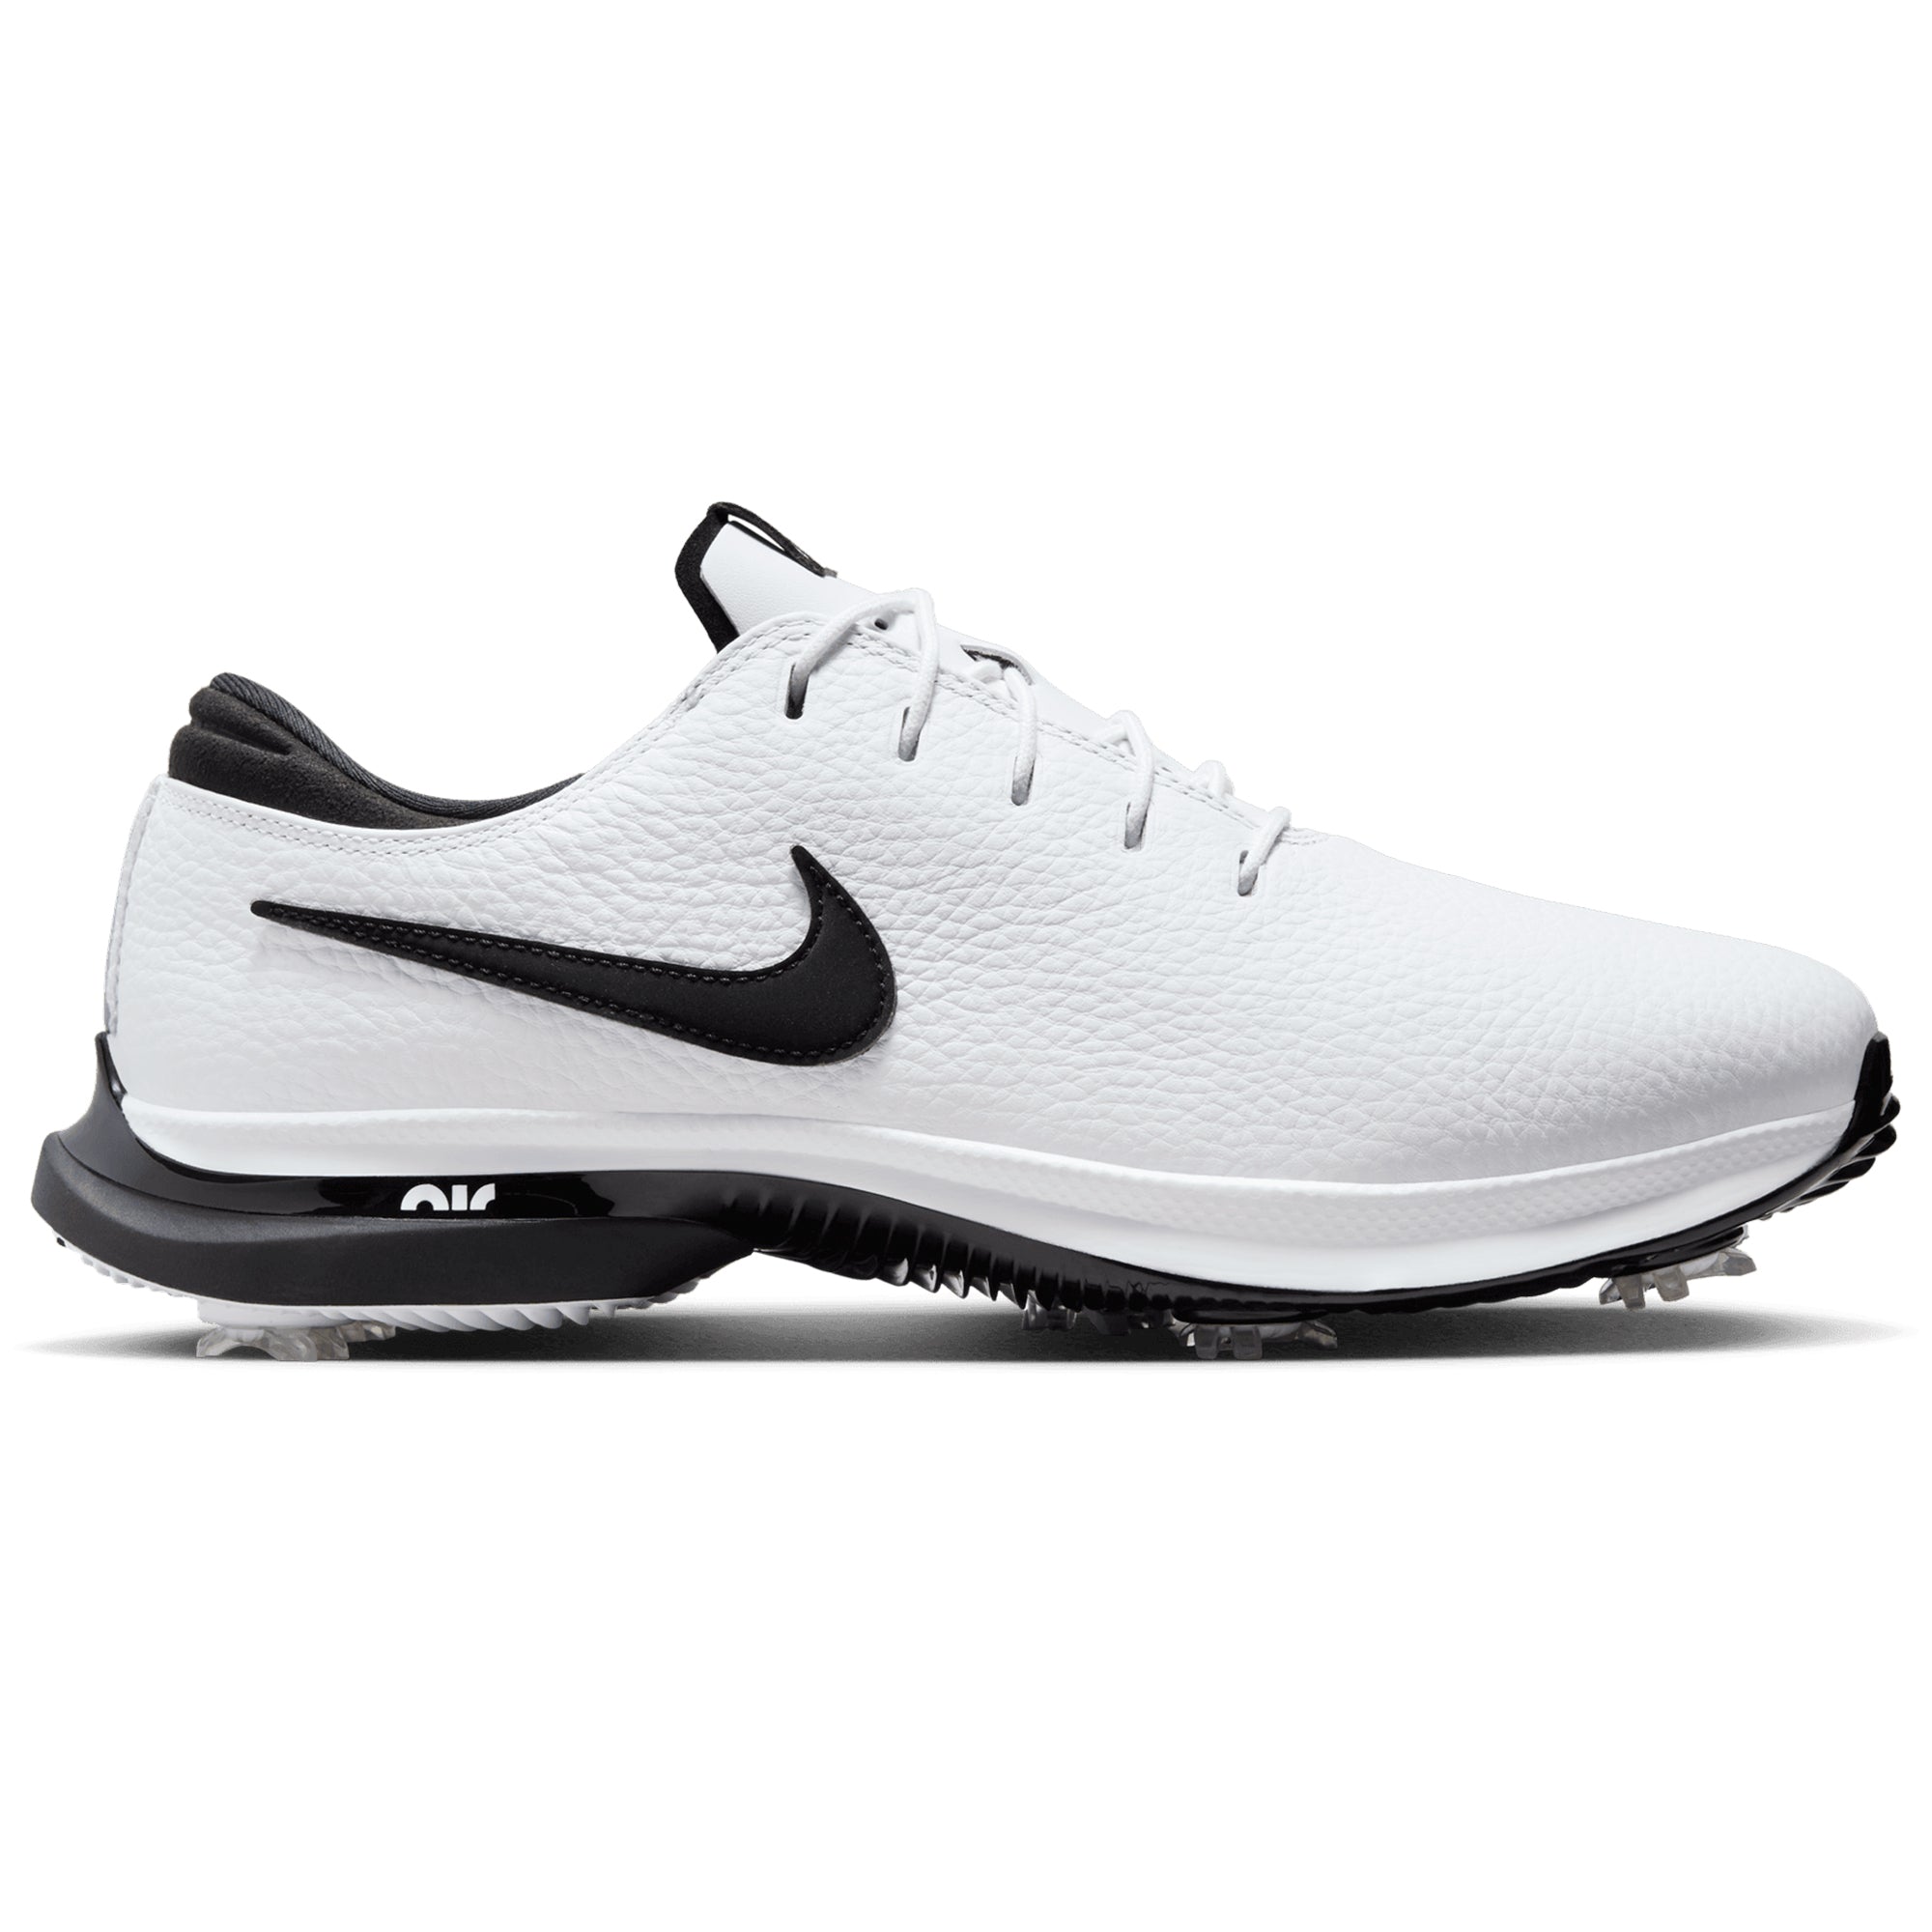 nike-golf-air-zoom-victory-tour-3-shoes-dv6797-103-white-black